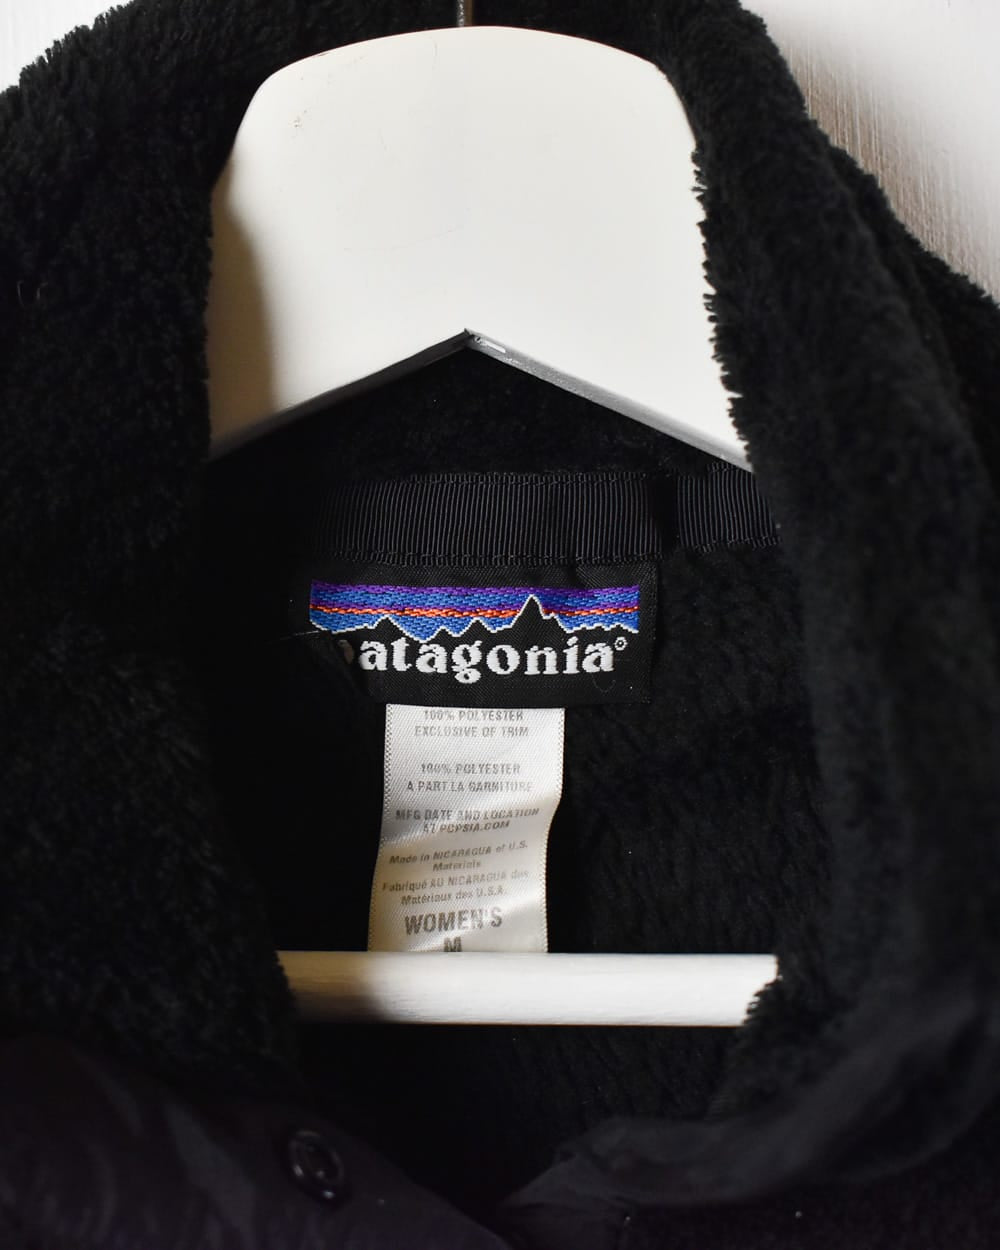 Black Patagonia 1/4 Button Fleece - Medium Women's